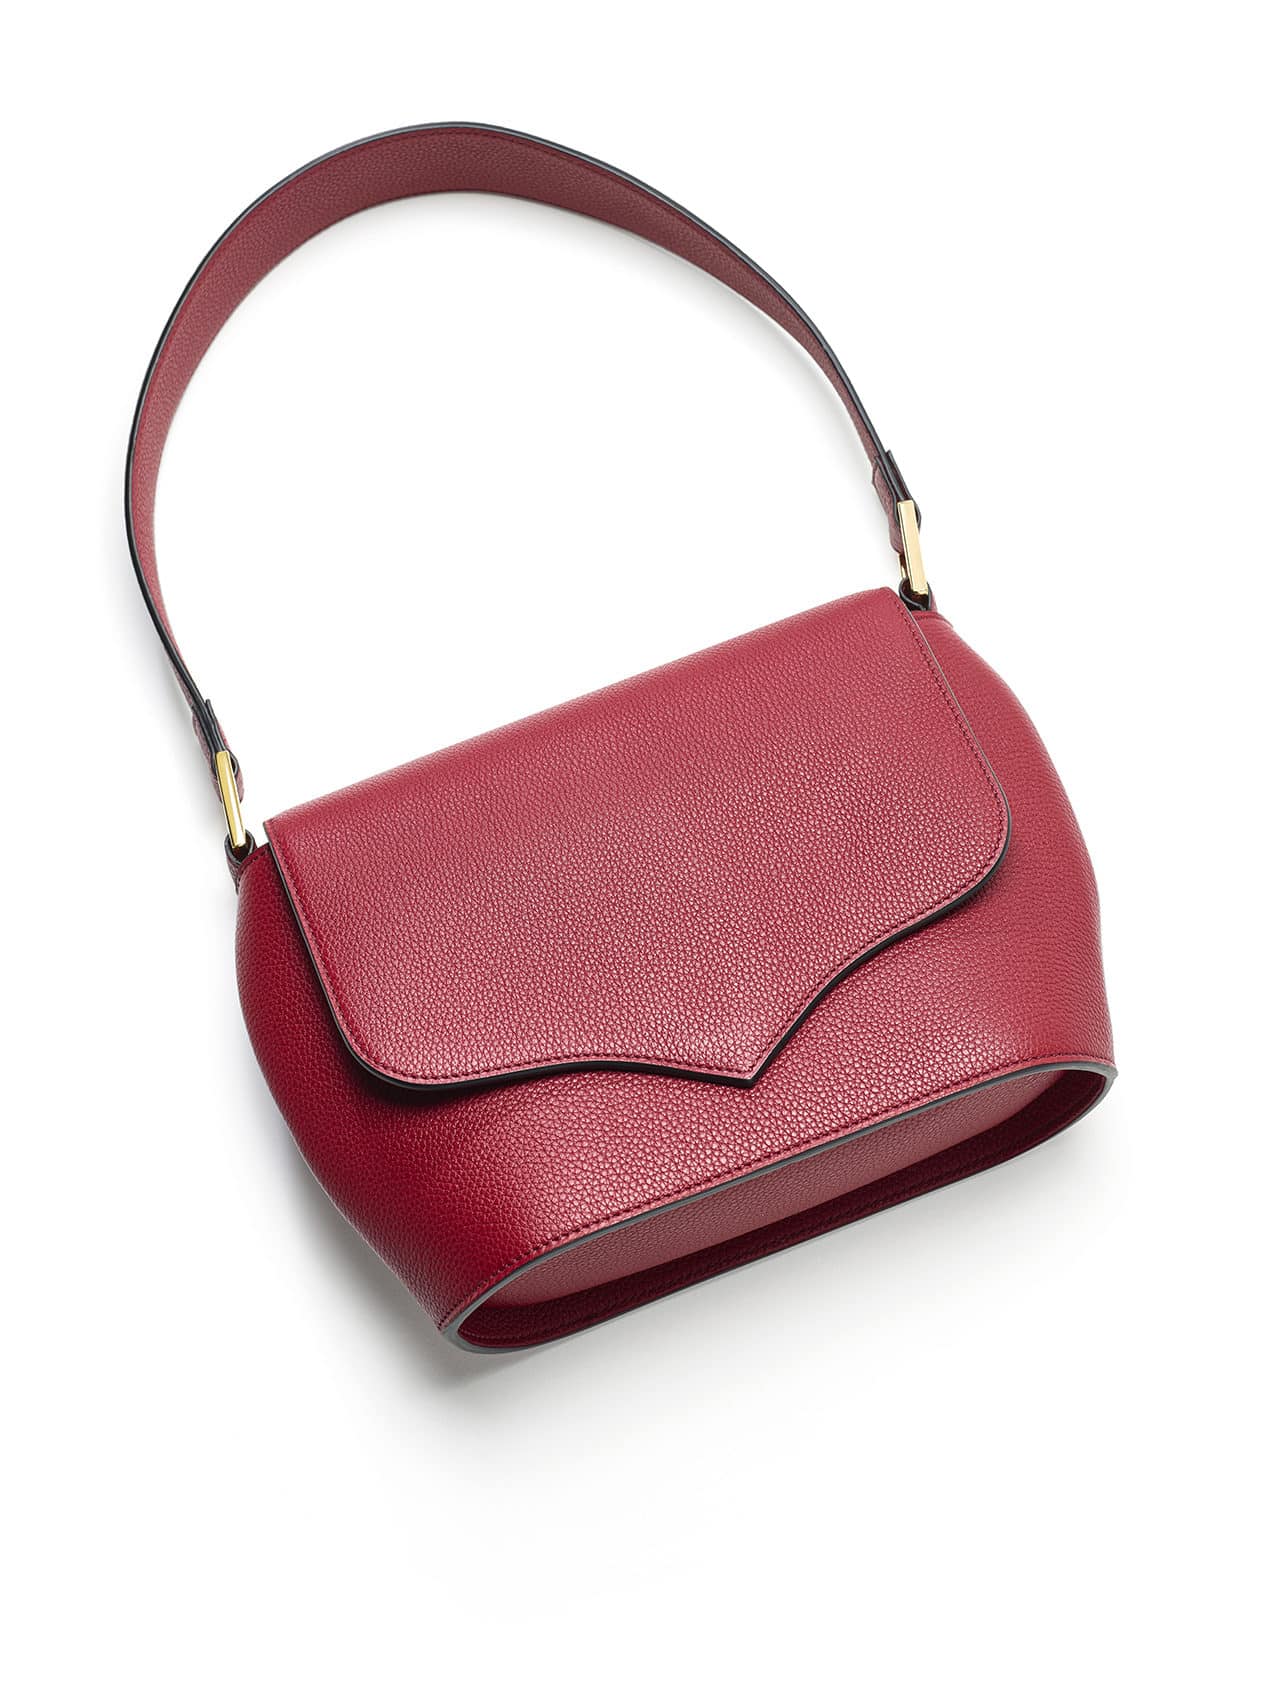 handbag leather pink